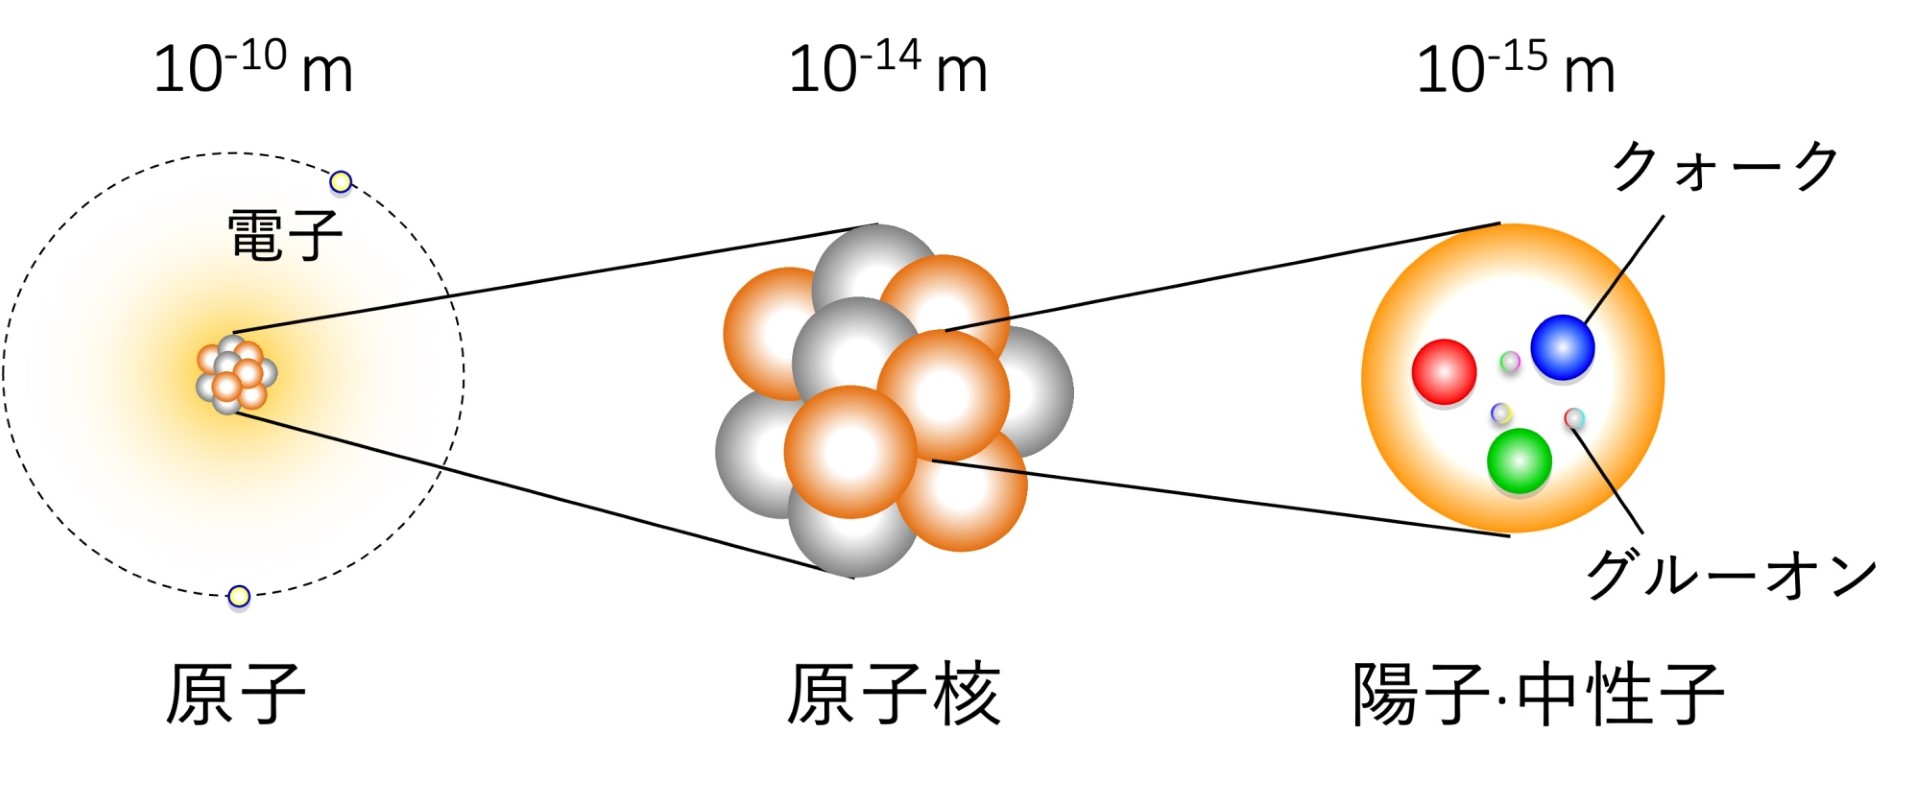 図1 物質の階層構造